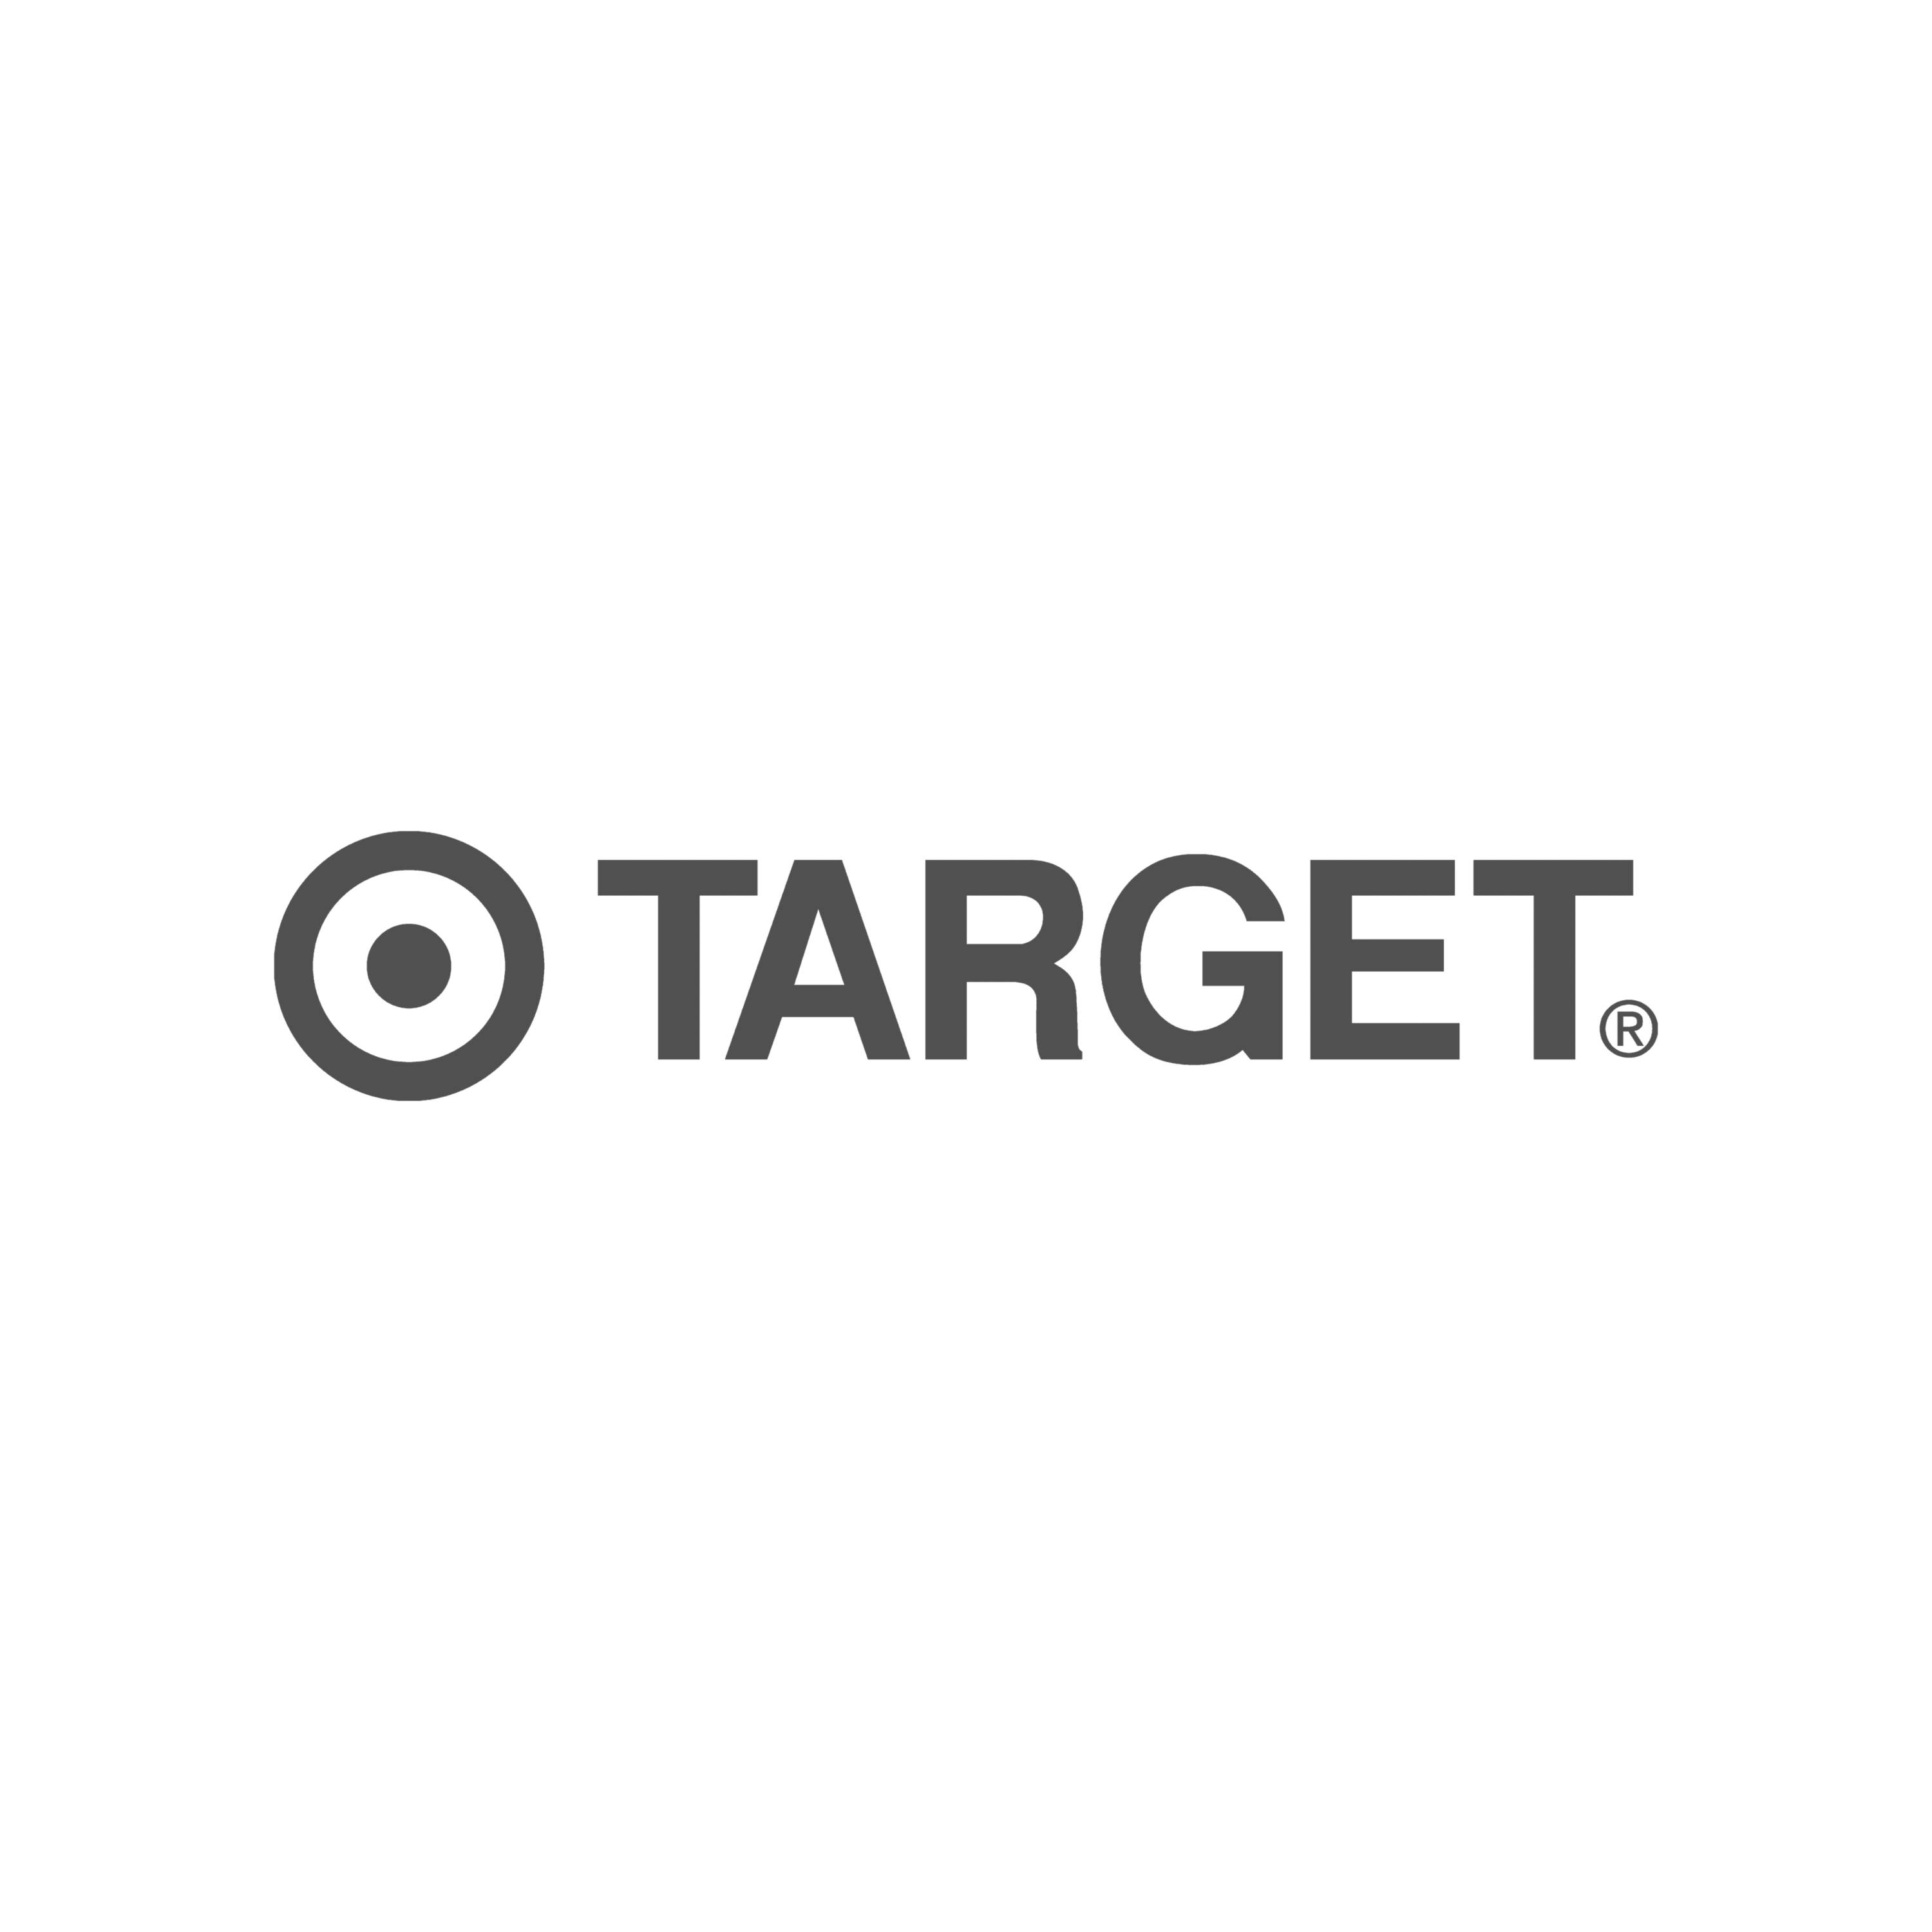 a Target logo